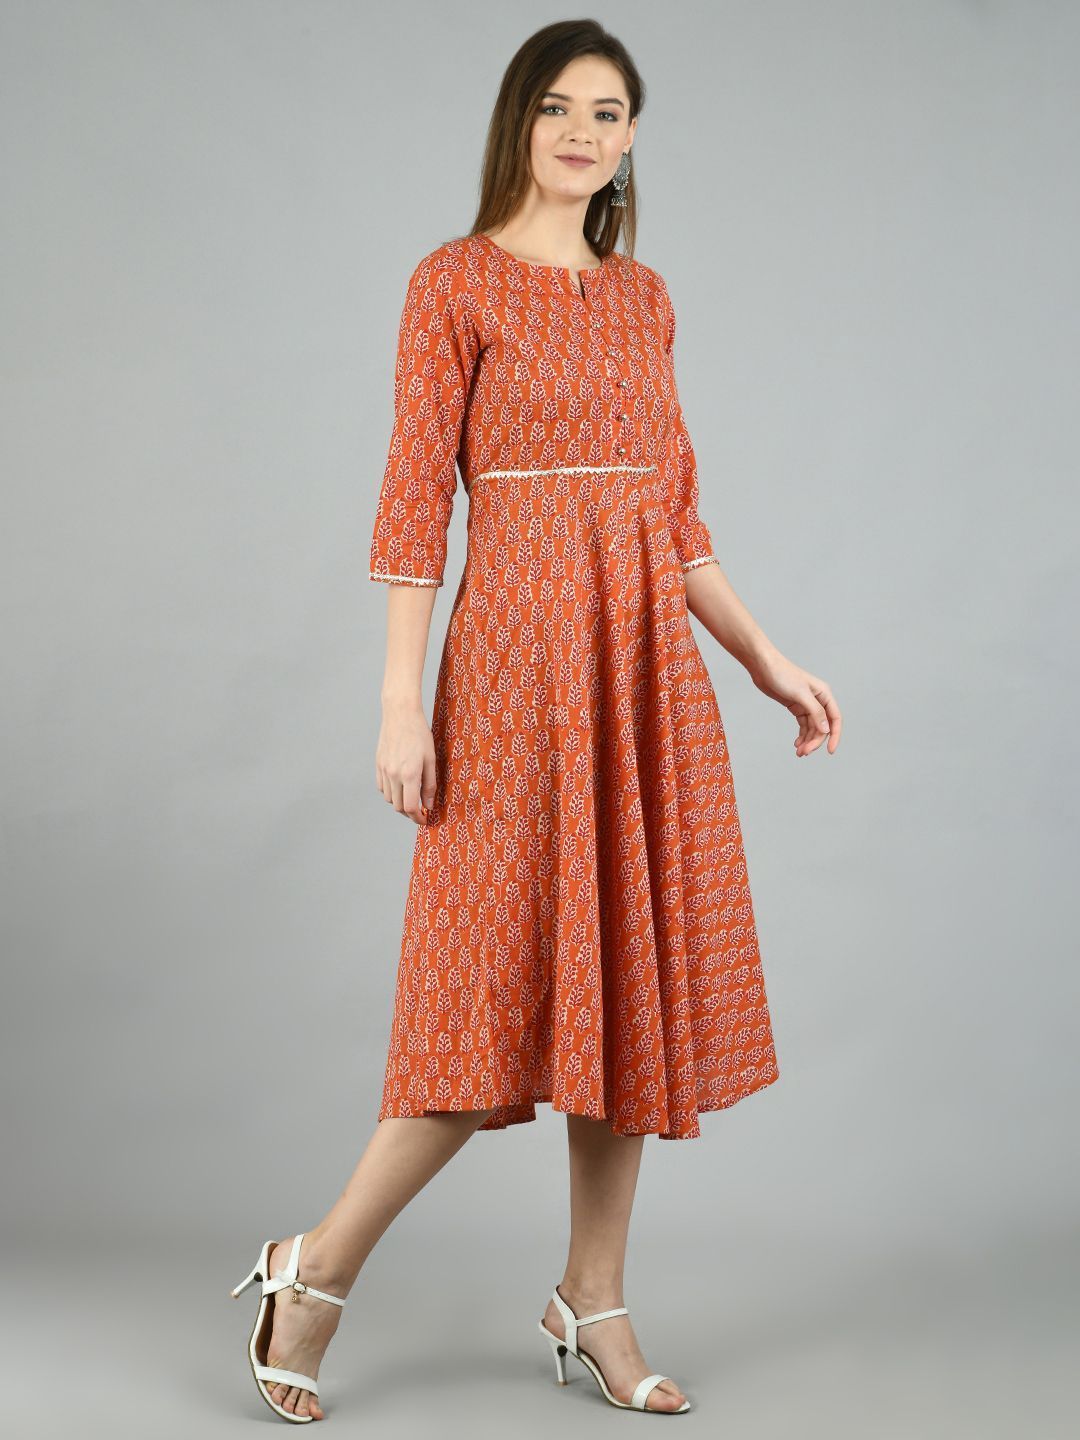 Women's Brown Cotton Printed 3/4 Sleeve Round Neck Casual Dress - Myshka